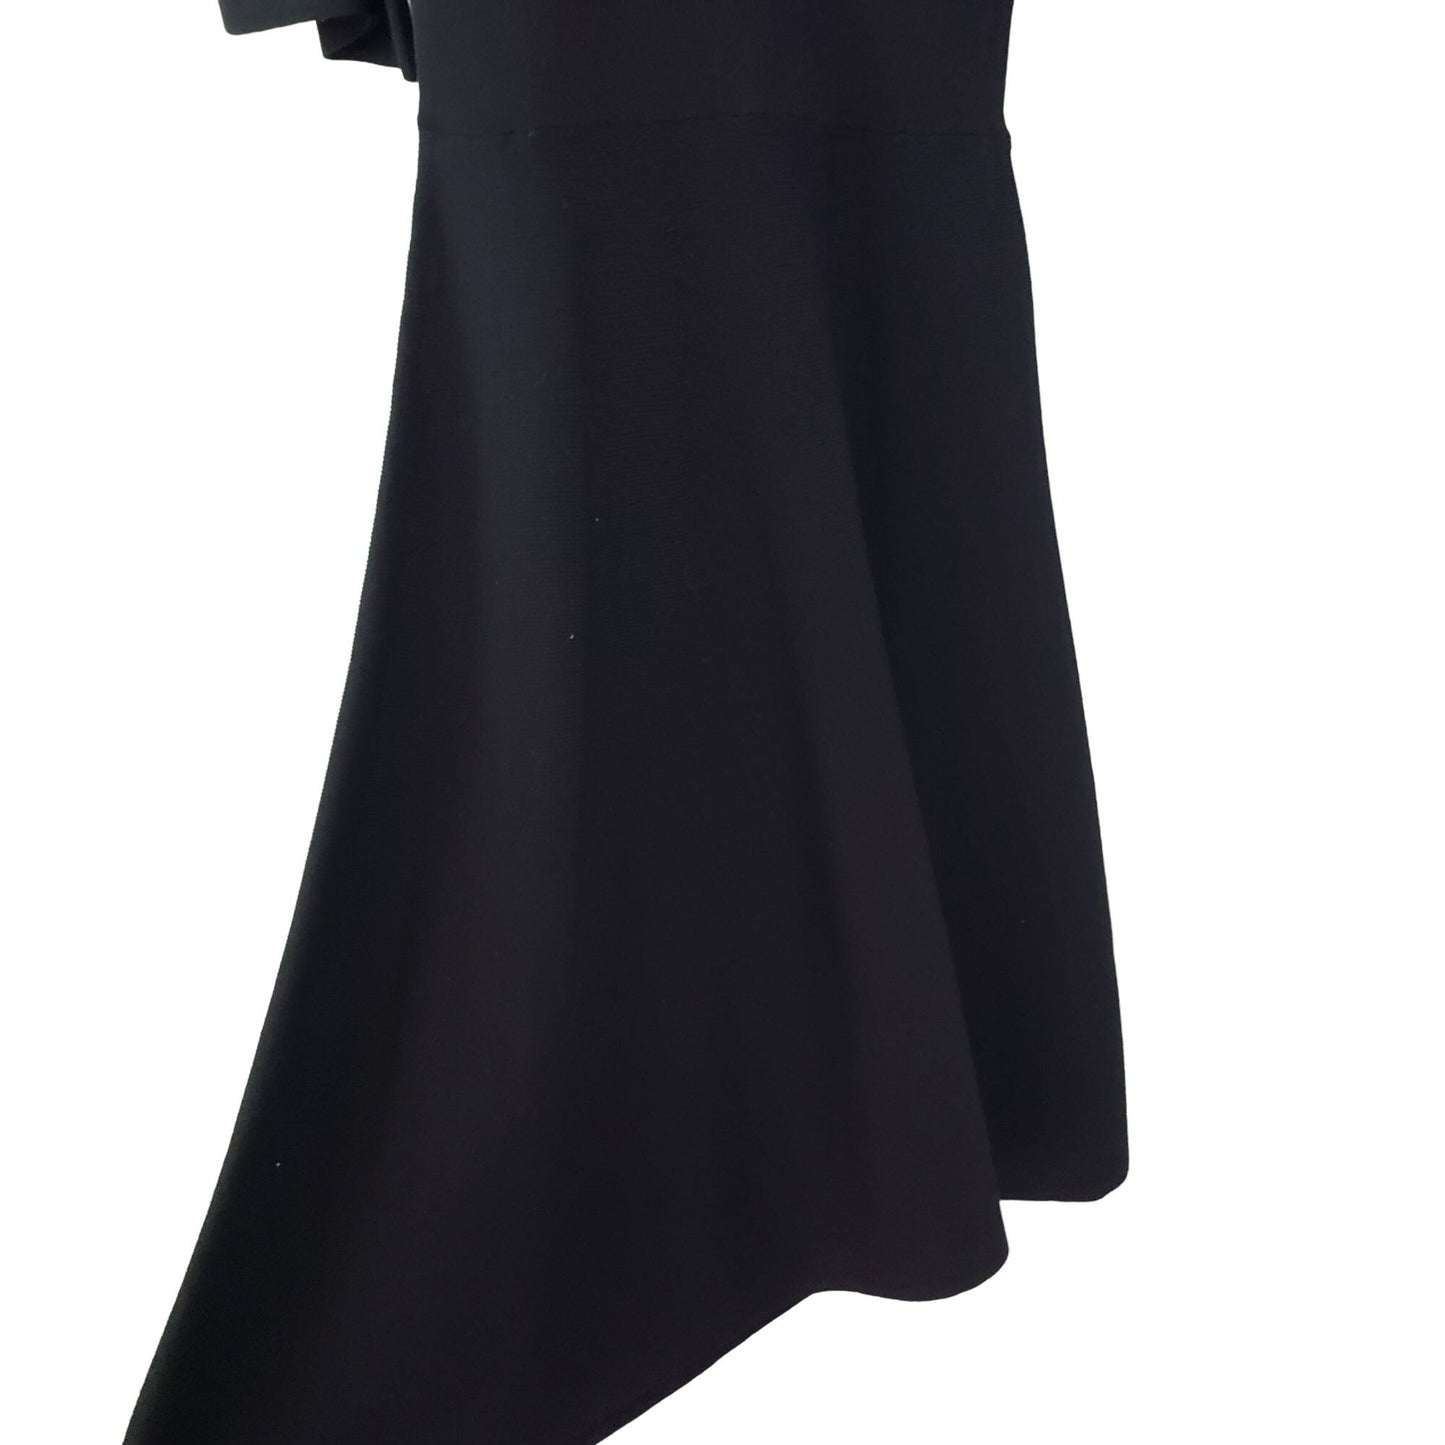 NWT Kate Spade Fit & Flare Jewel Embellished Dress Size XS